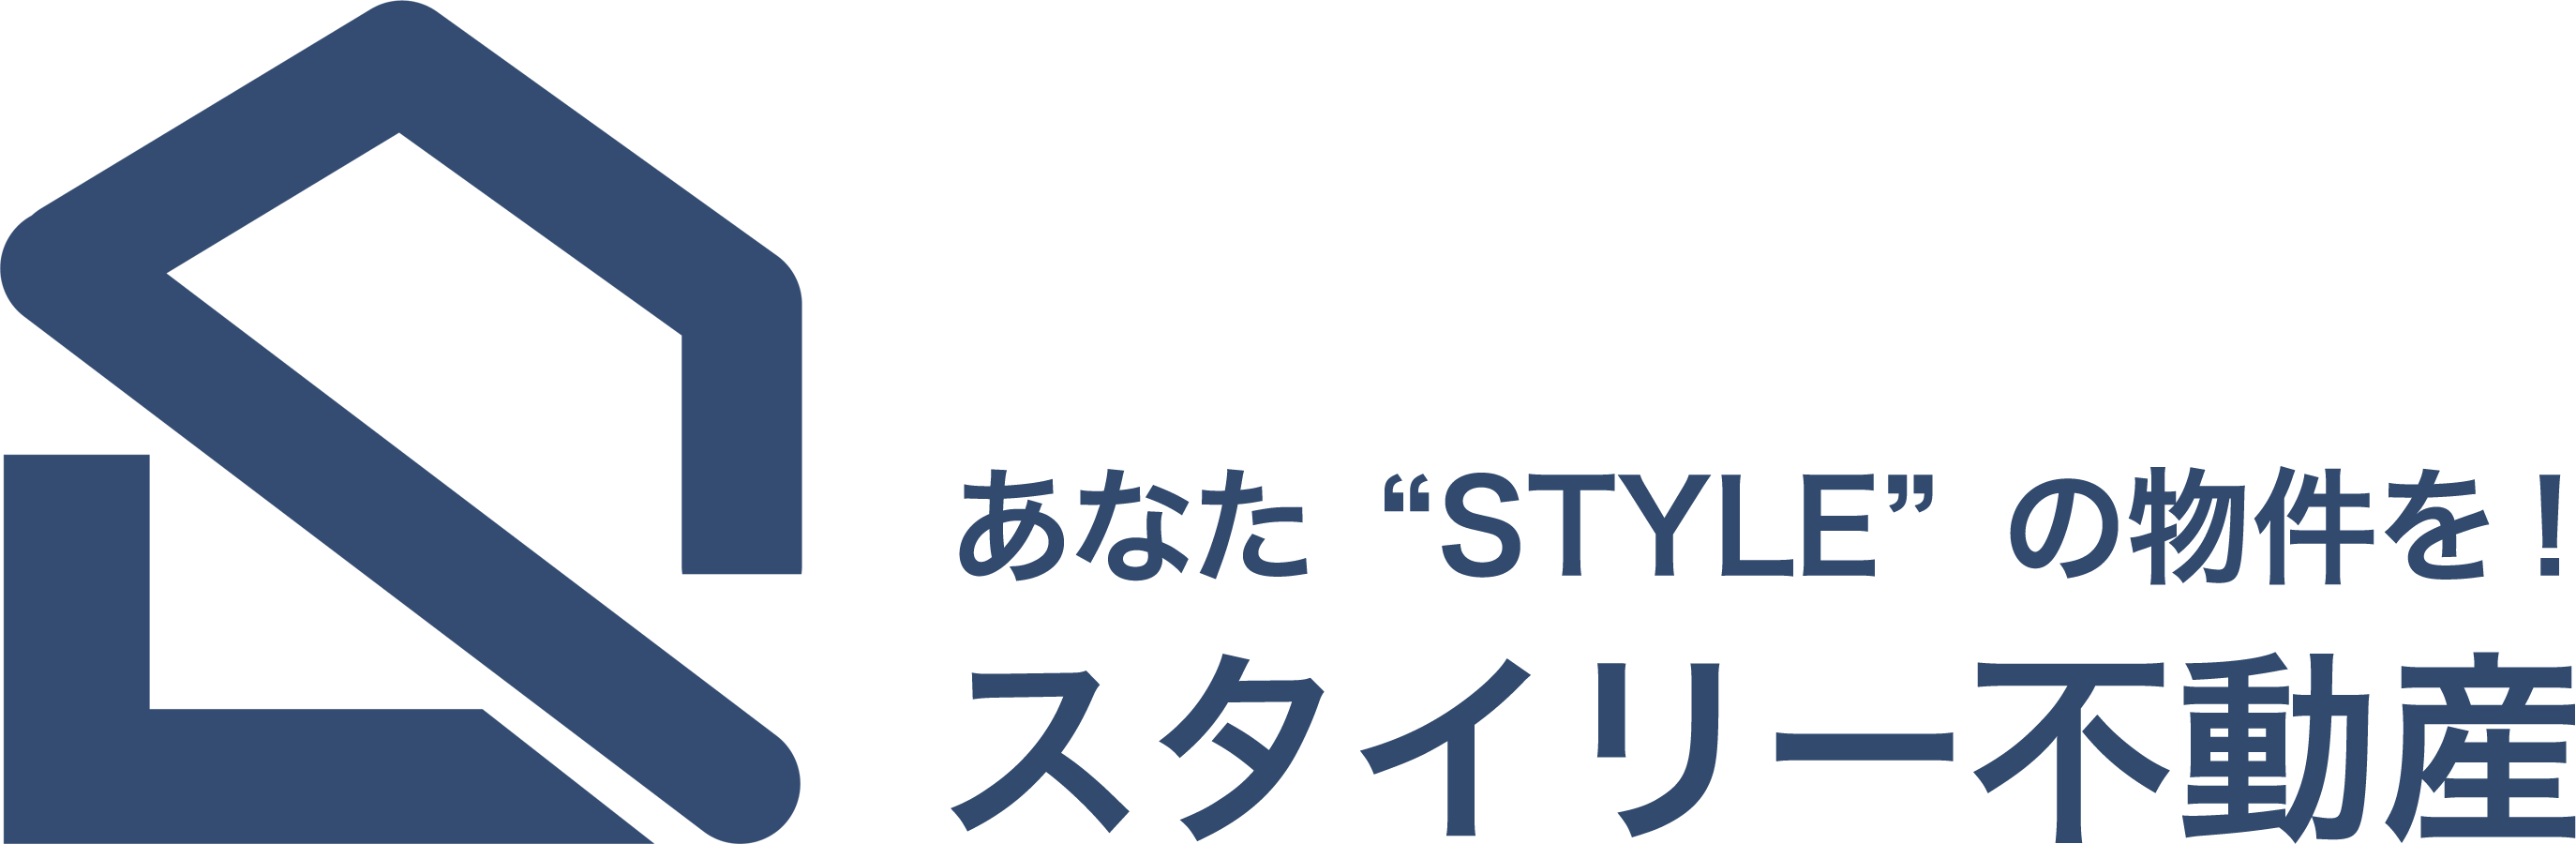 STYLEE不動産【家族のお引越し専門】